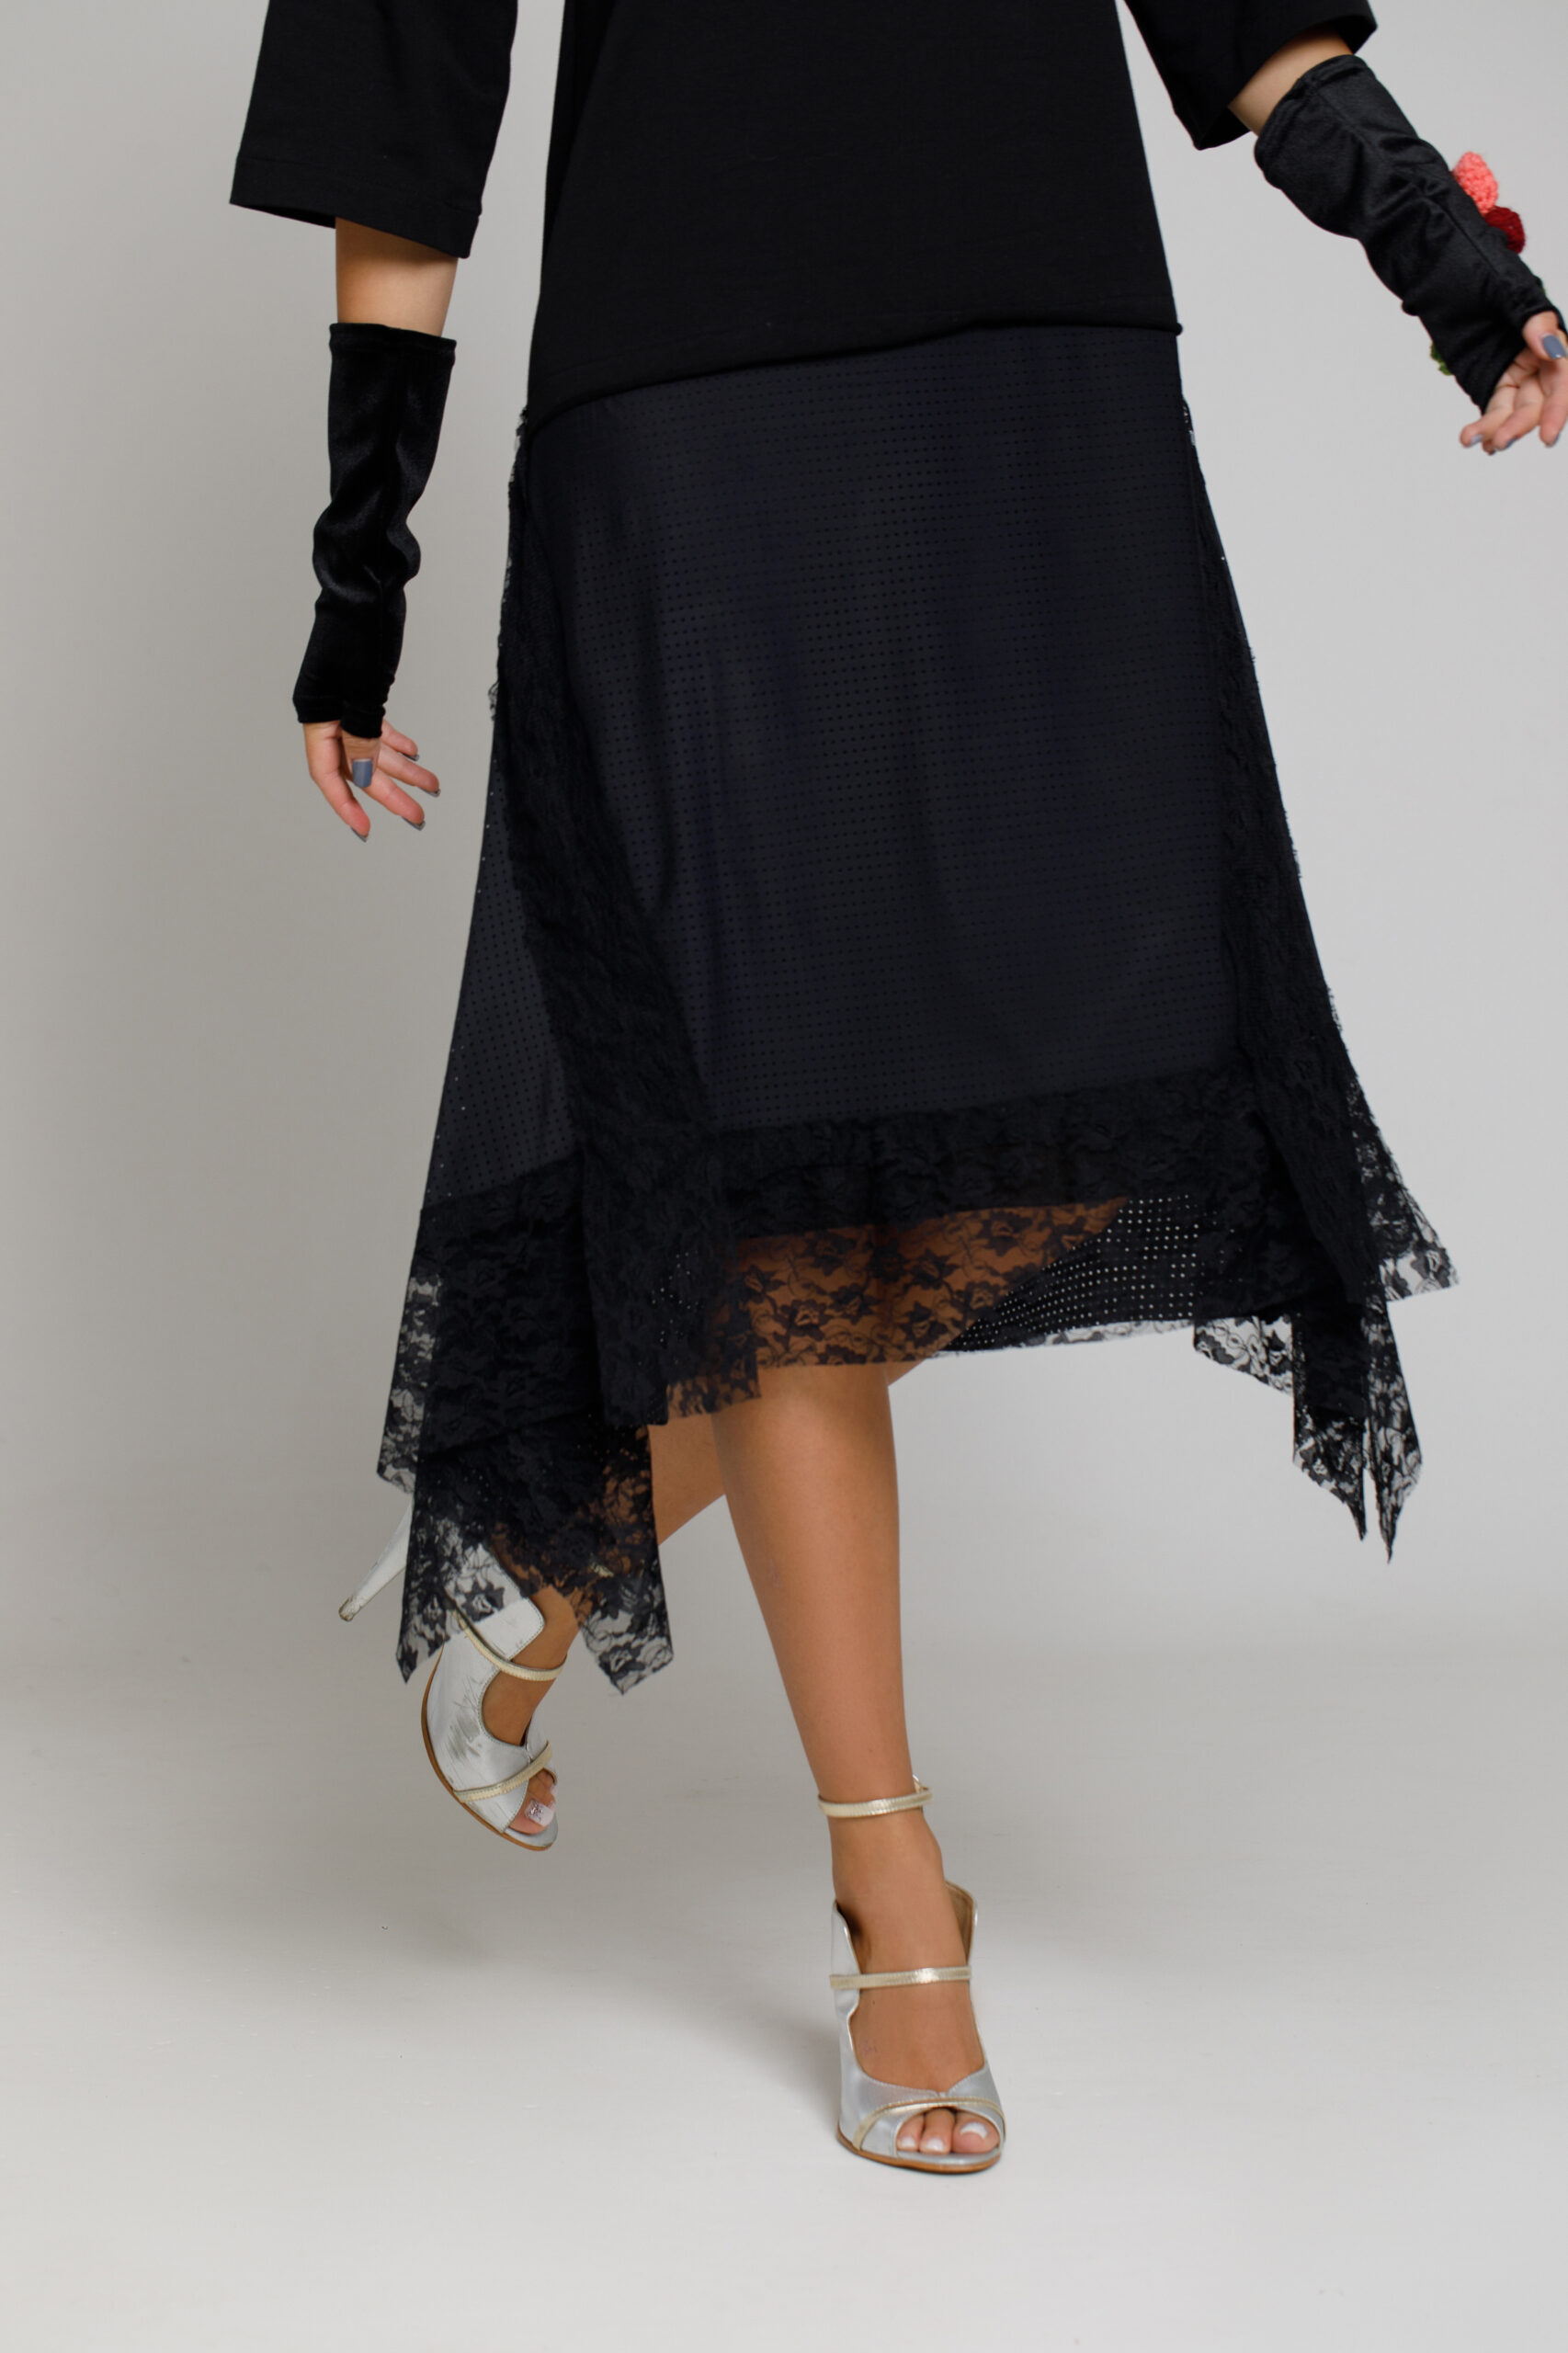 ALDA Black asymmetric dress with lace border. Natural fabrics, original design, handmade embroidery